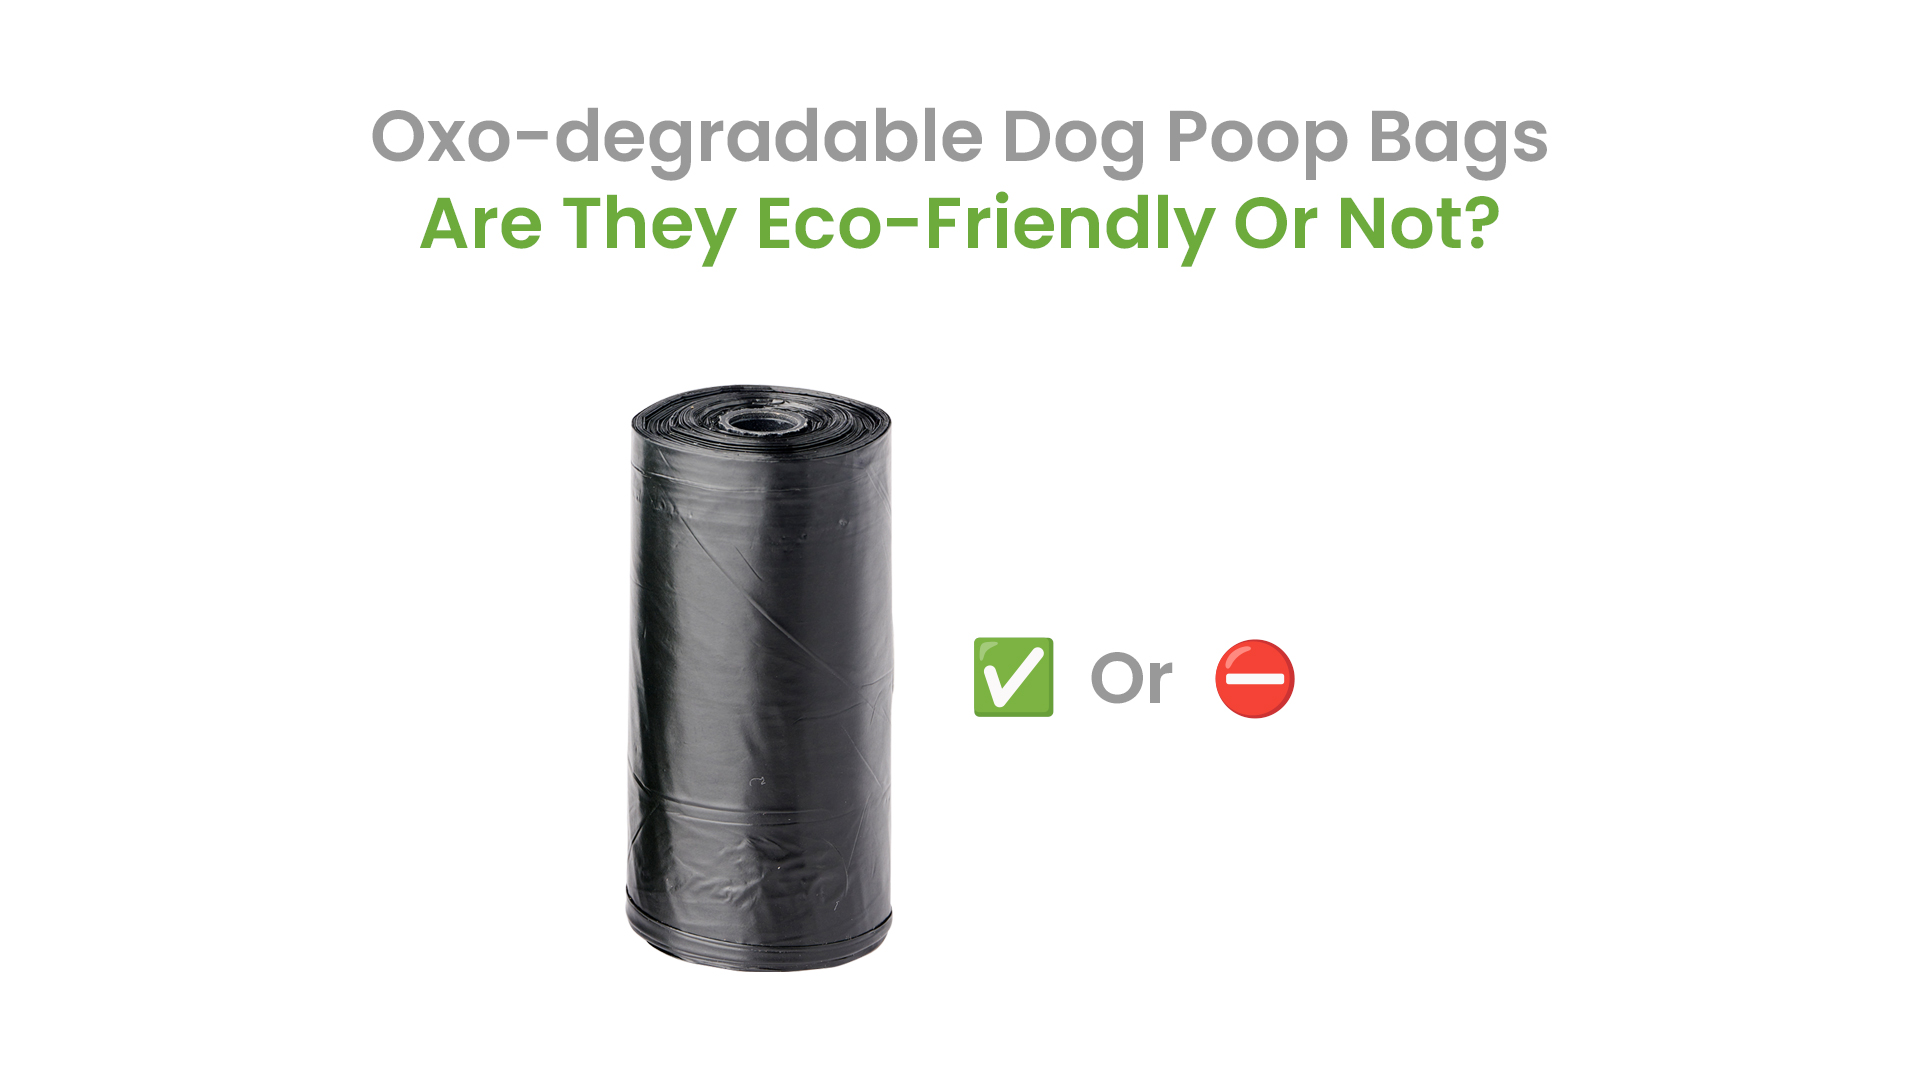 Image of Oxo-degradable Dog Poop Bag